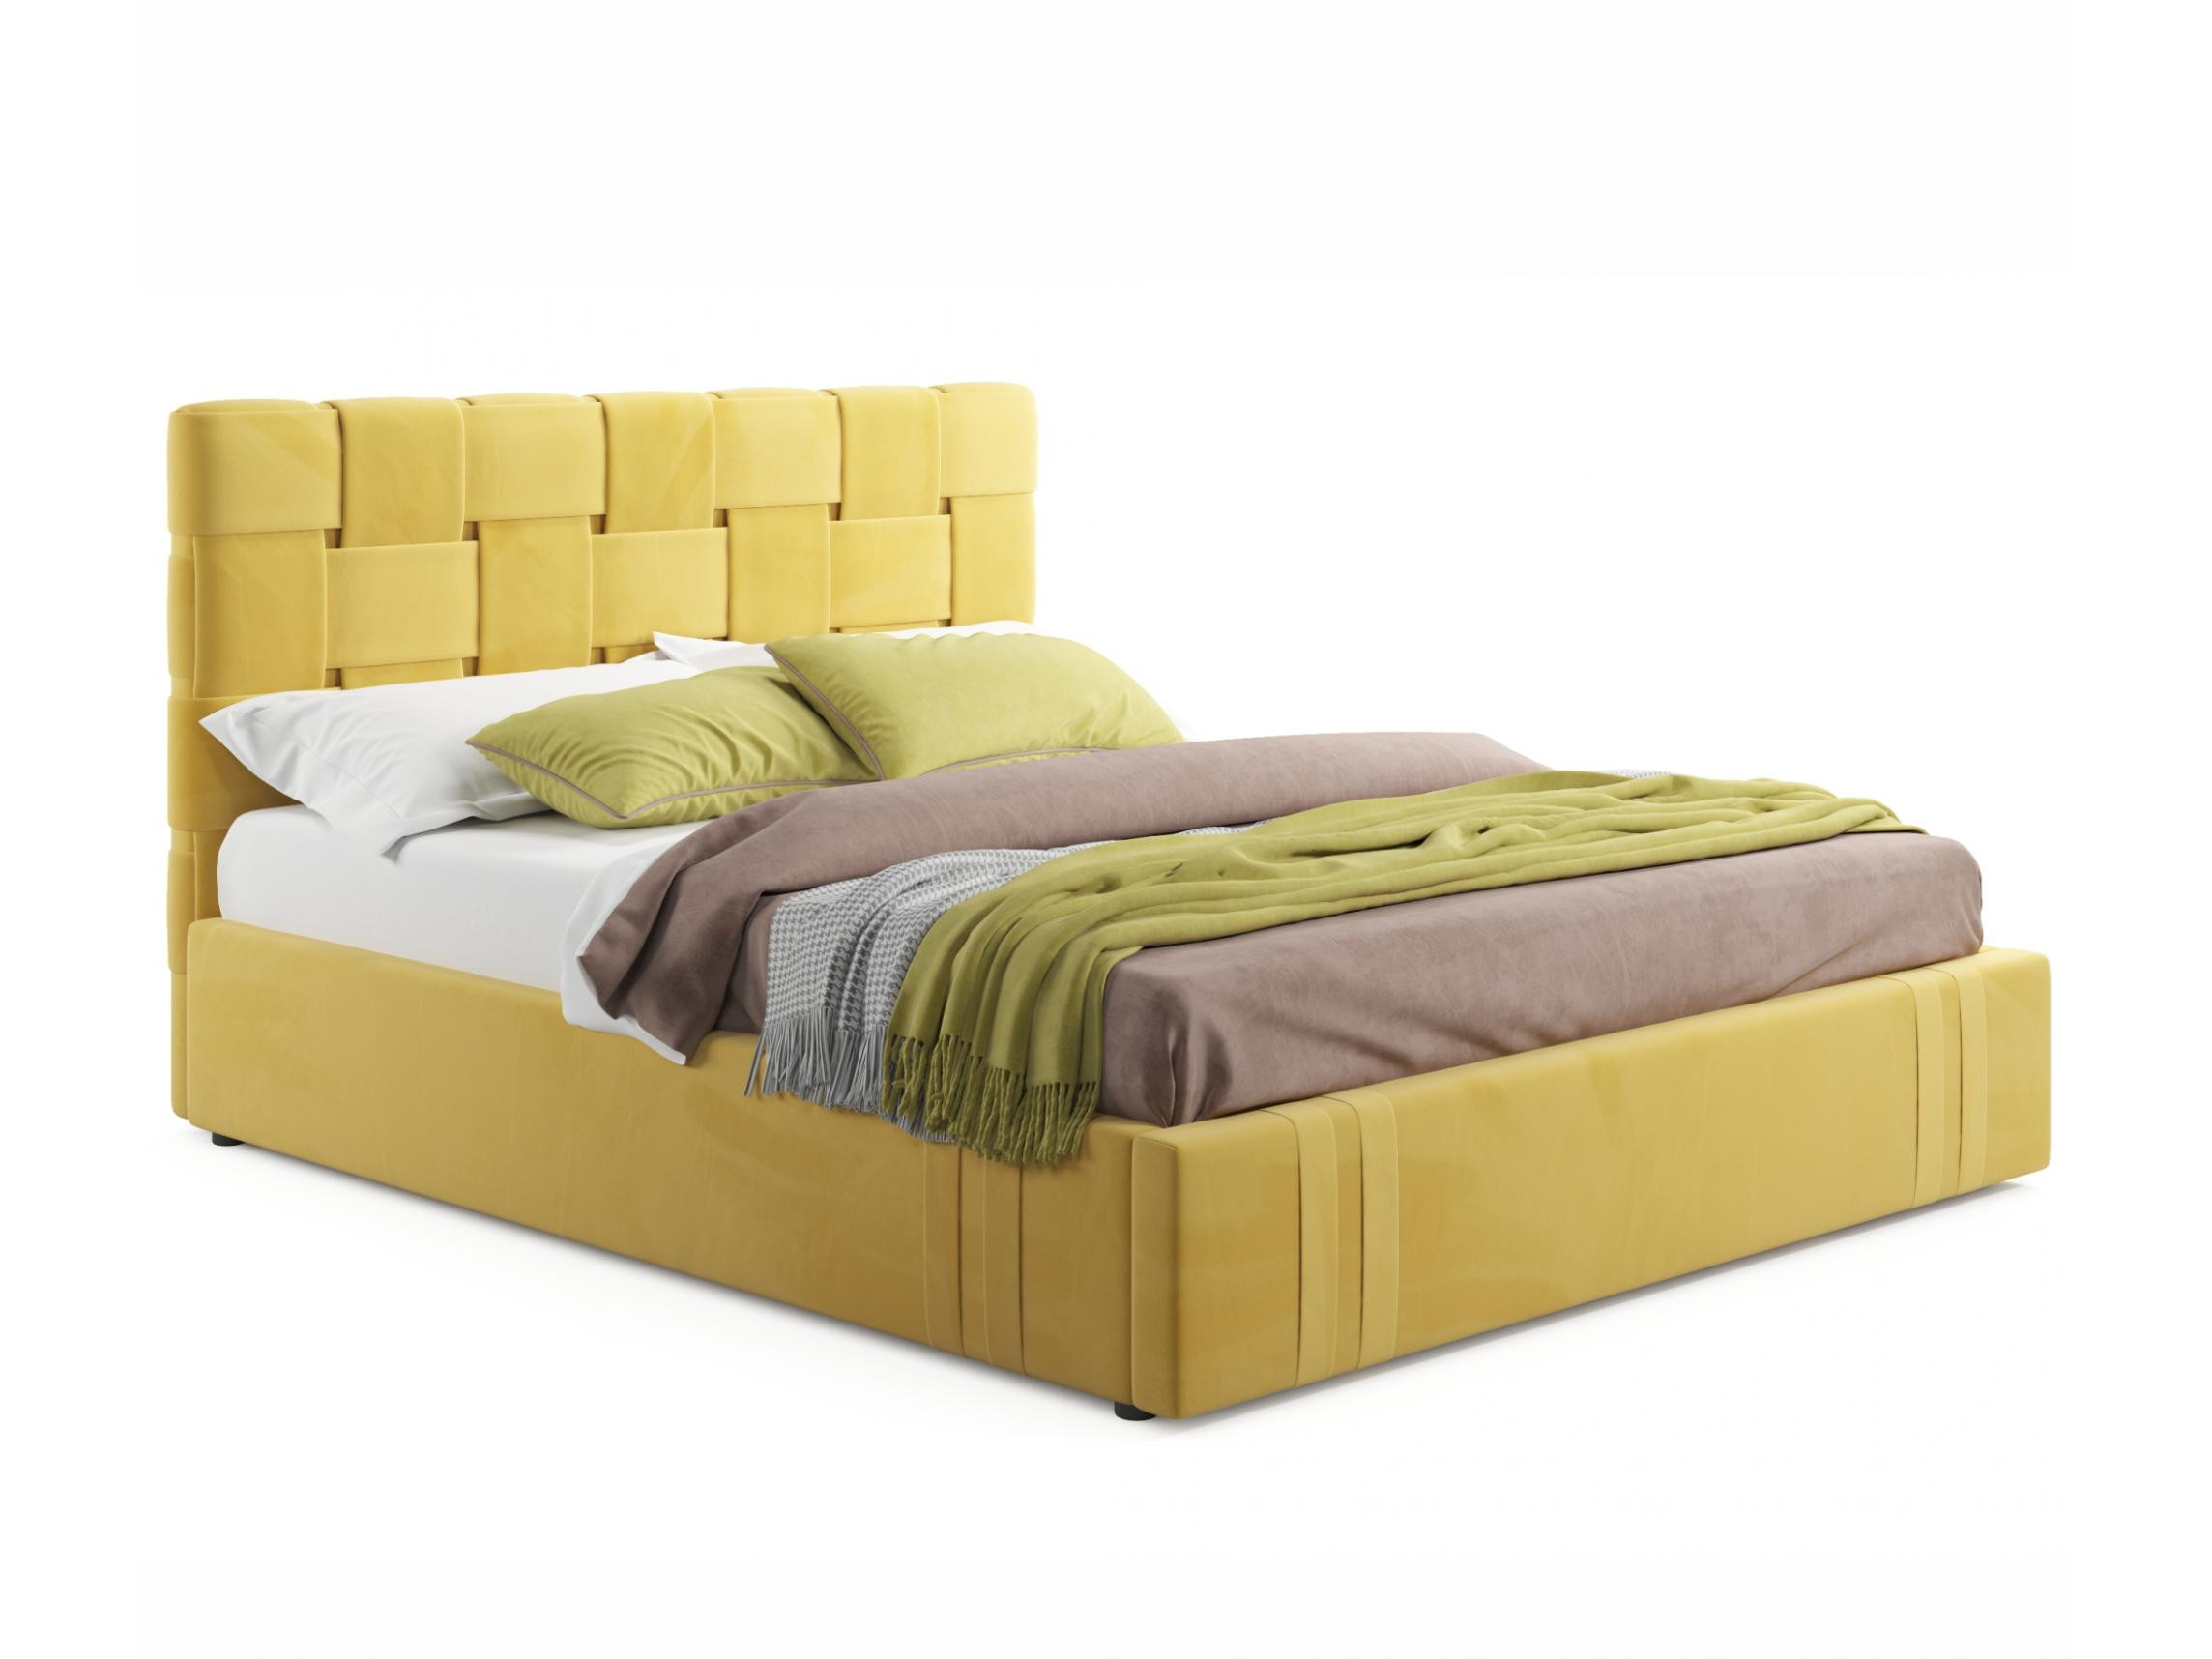 Комплект для сна Tiffany 1600 желтый с подъемным механизмом желтый, Желтый, Велюр, ДСП комплект для сна амели 1600 венге с подъемным механизмом